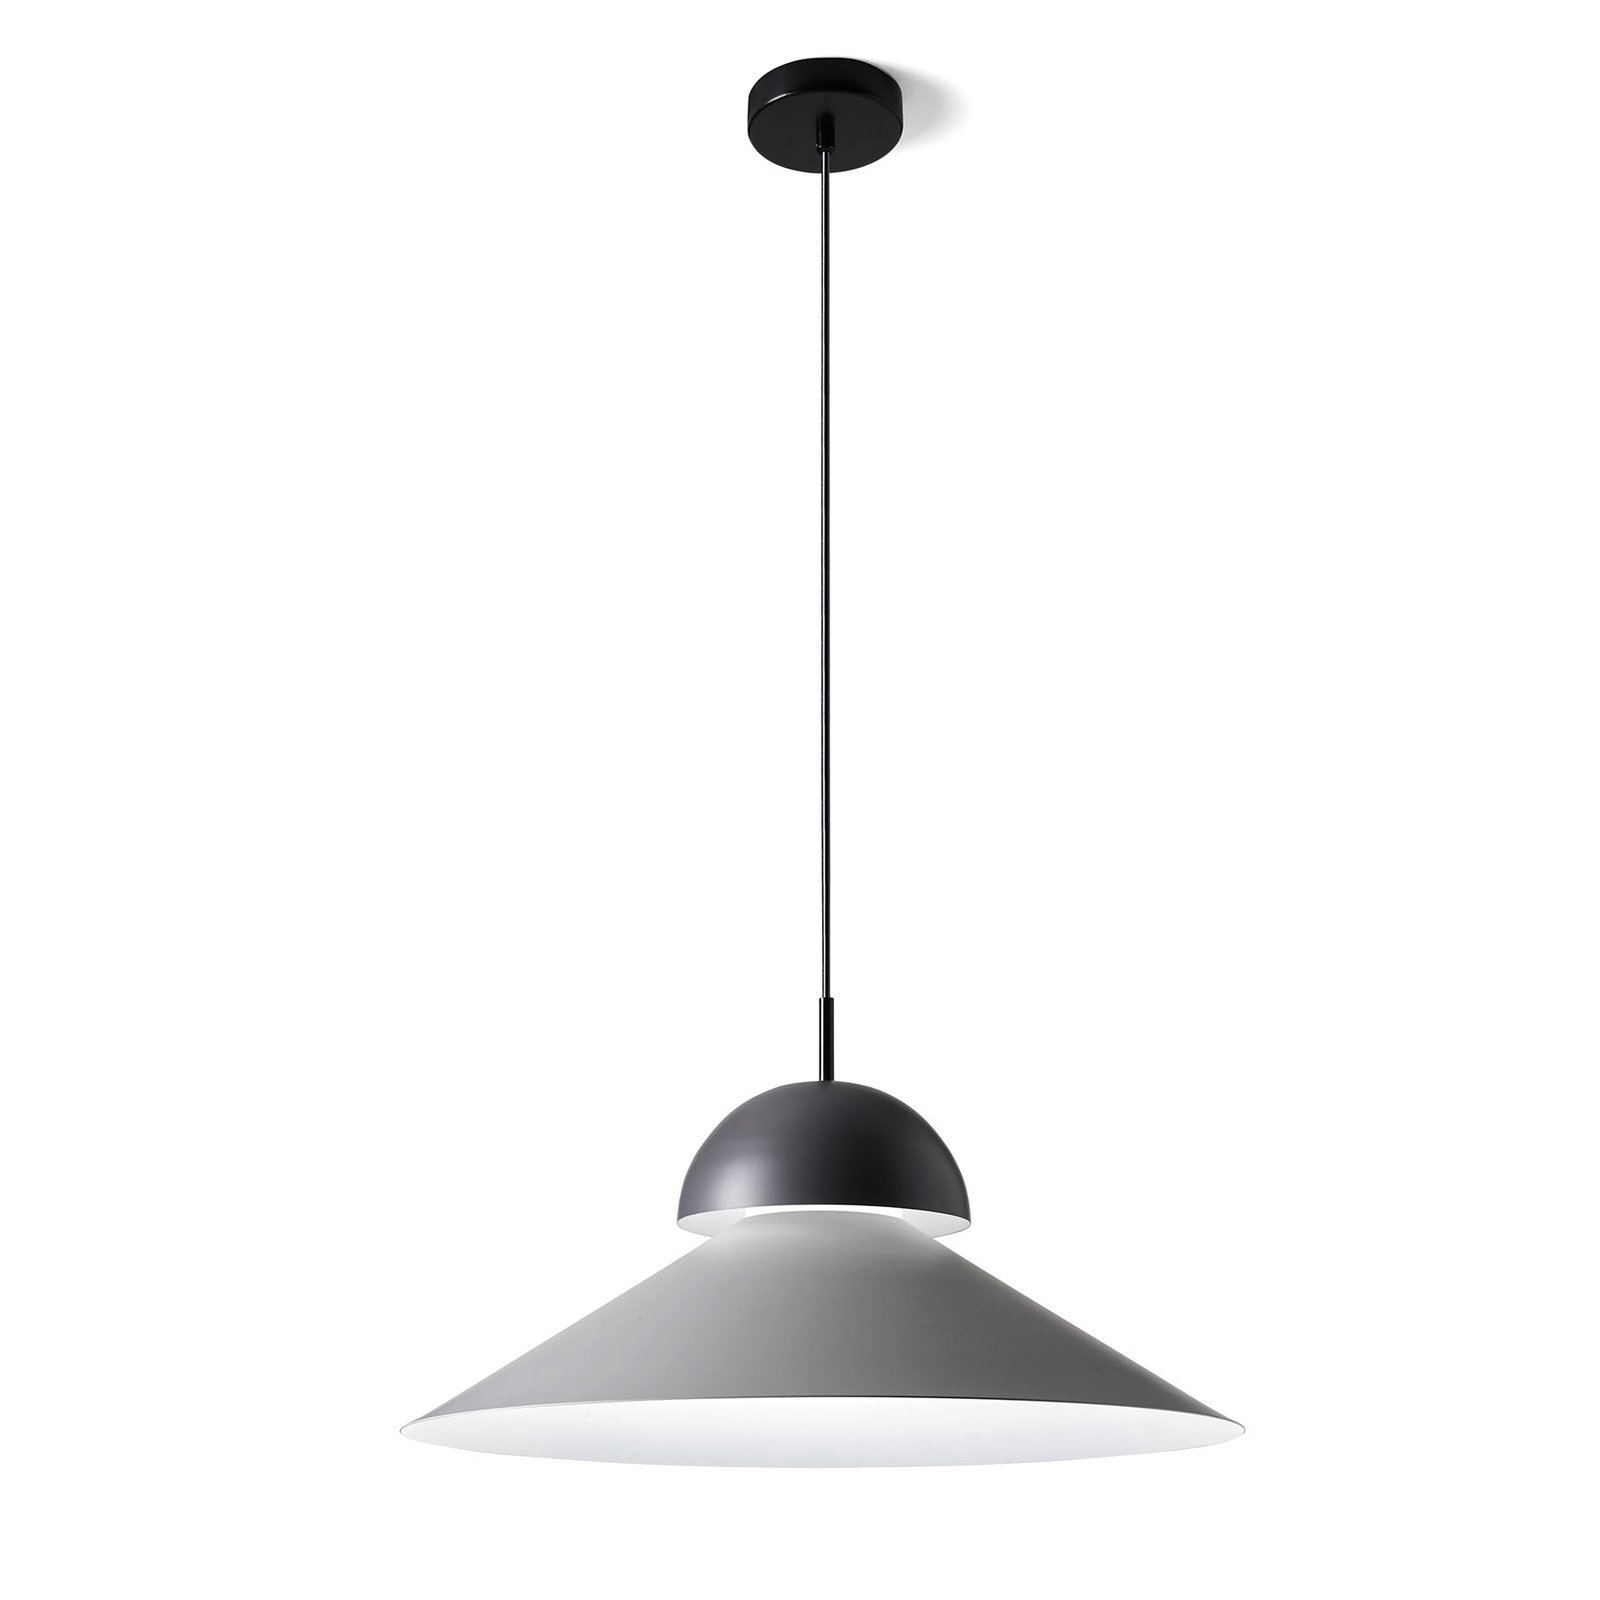 Alba hanging light in metal, dark grey